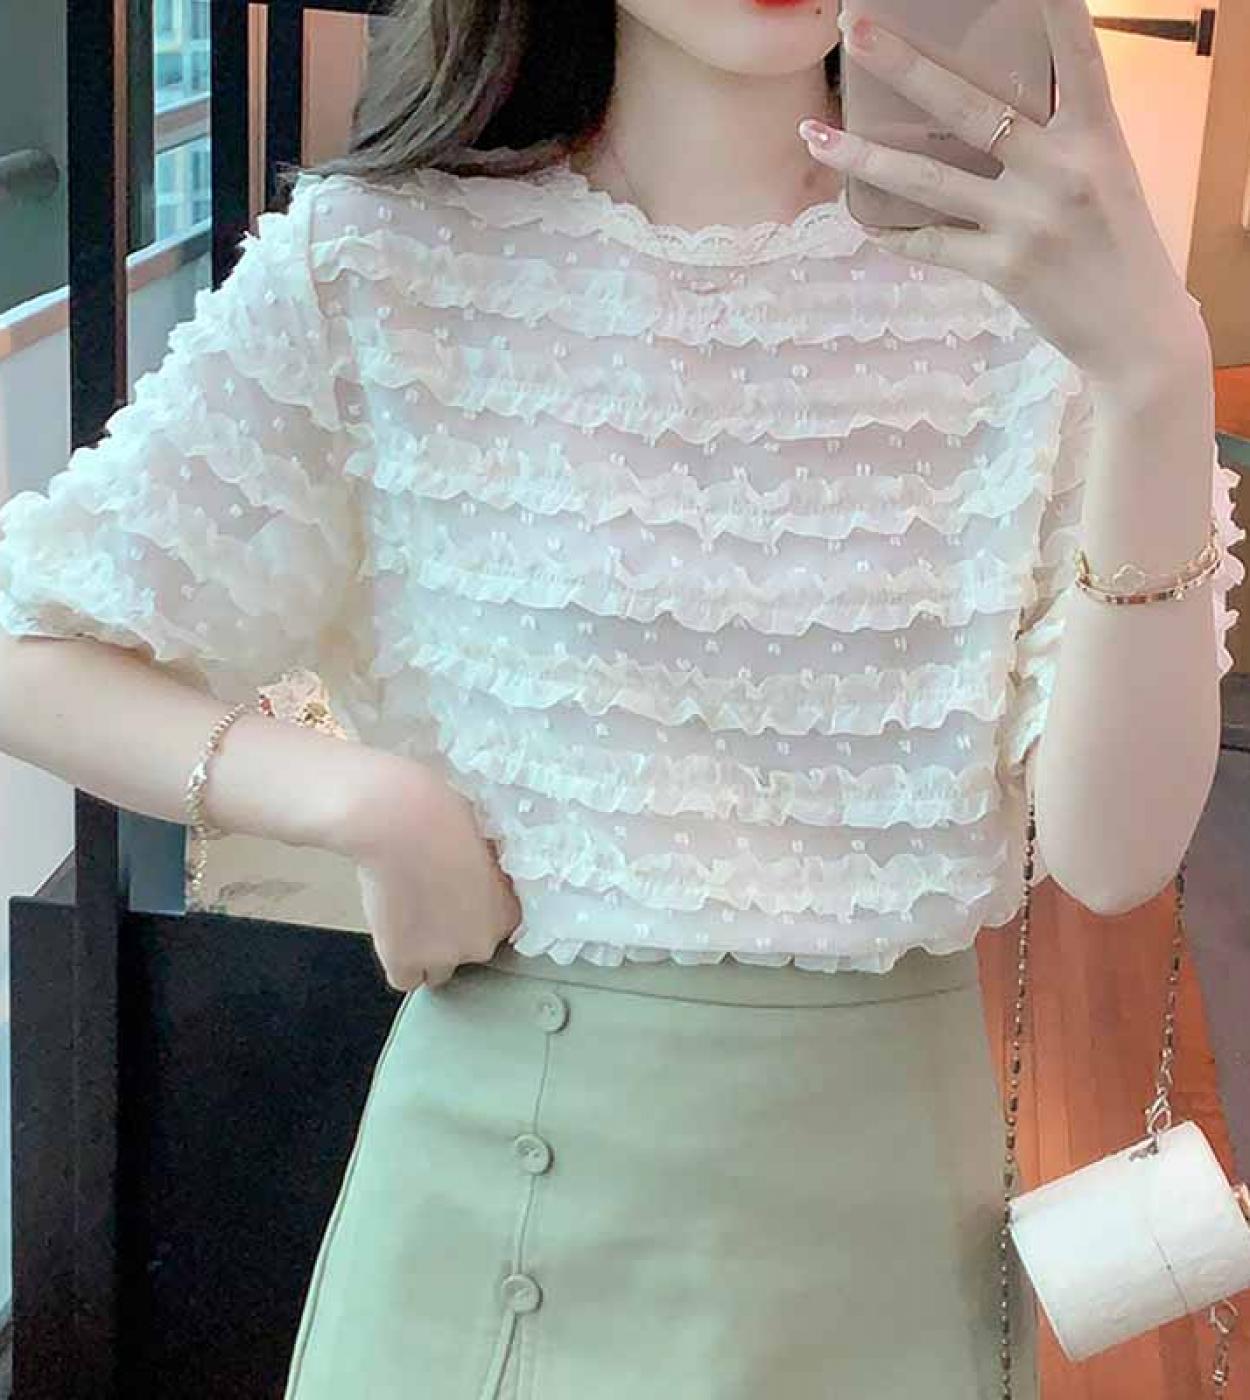 Summer Short Sleeve Lace Blouse Woman Elegant O Neck Solid Chiffon Shirts Tops Fashion Clothing Womens Shirts Chic Blus